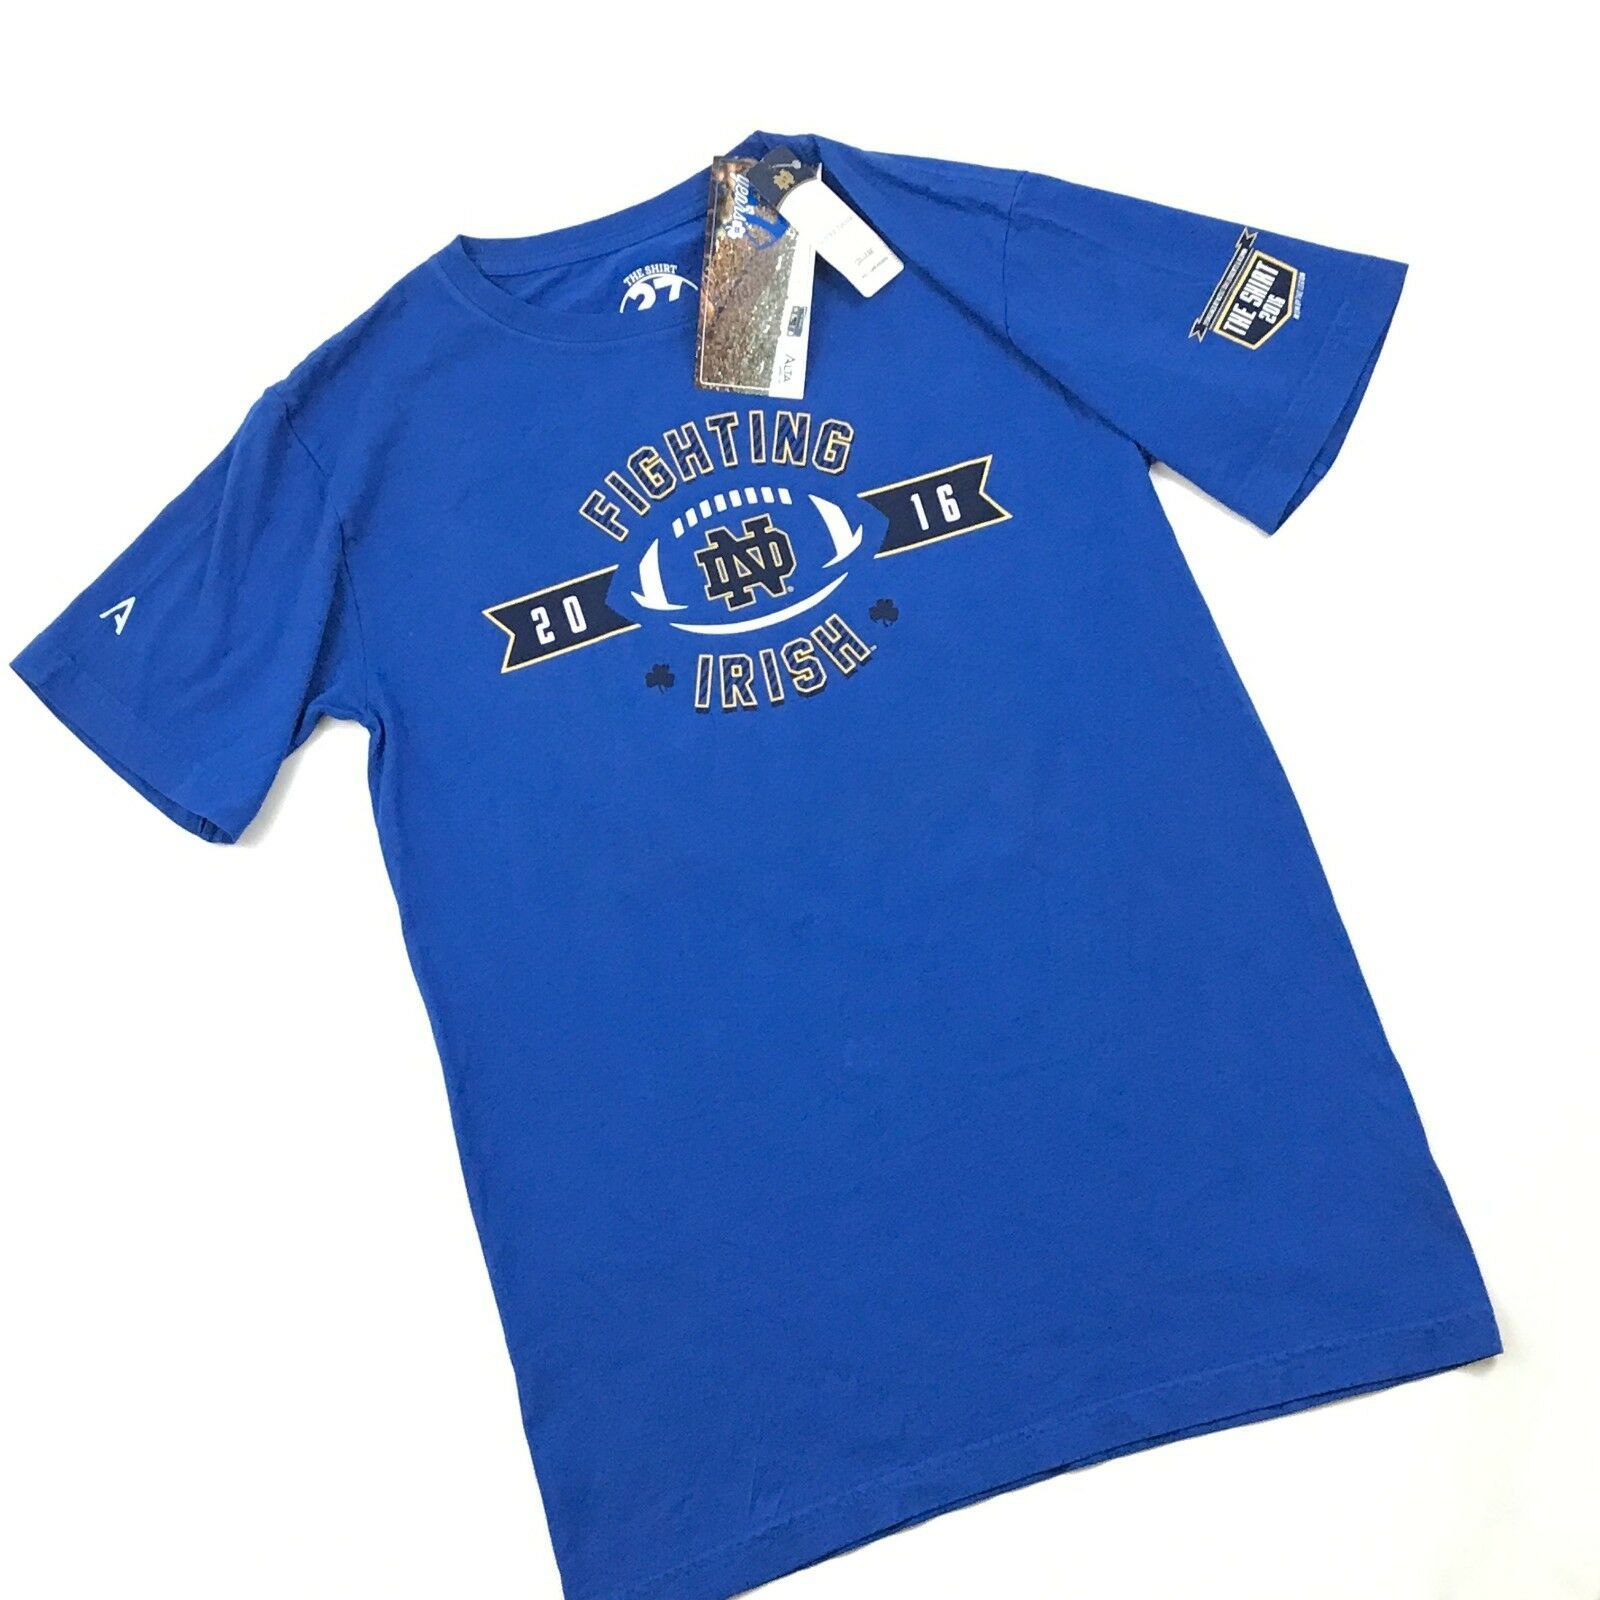 NEW The shirt Notre Dame T-shirt FIGHTING IRISH Blue Short Sleeve Sz M ...